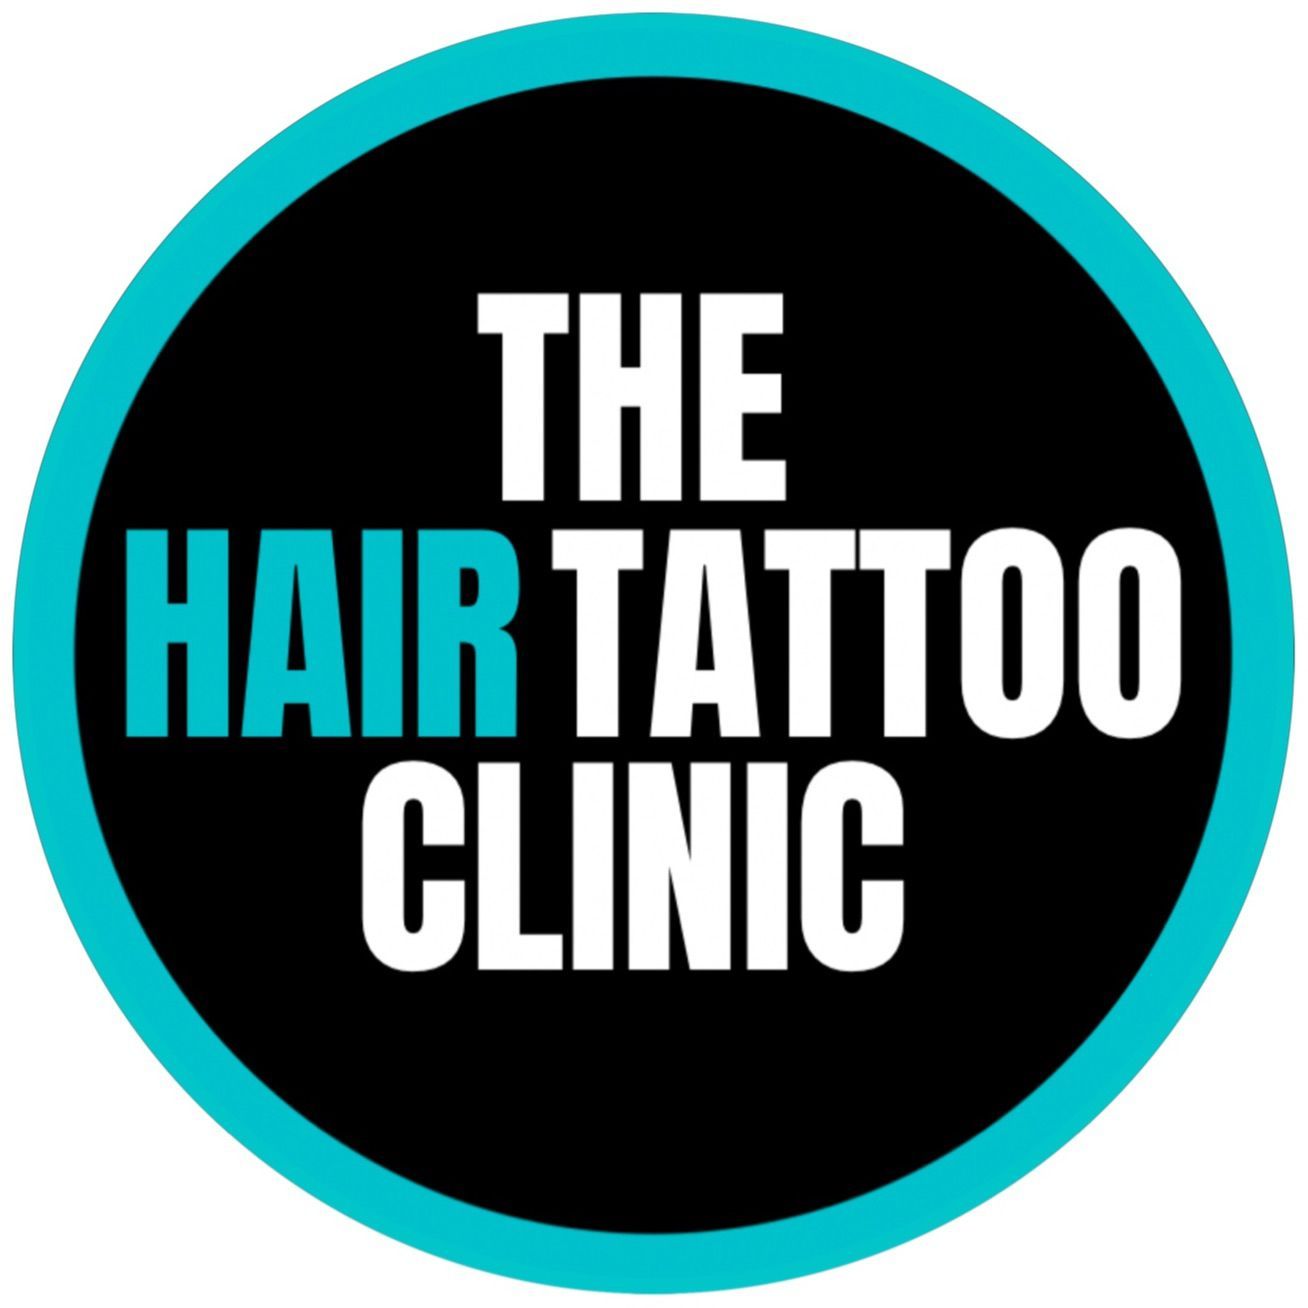 The hair tattoo clinic, Lord and Rocco  (top floor), Fazeley road, B78 3JN, Tamworth